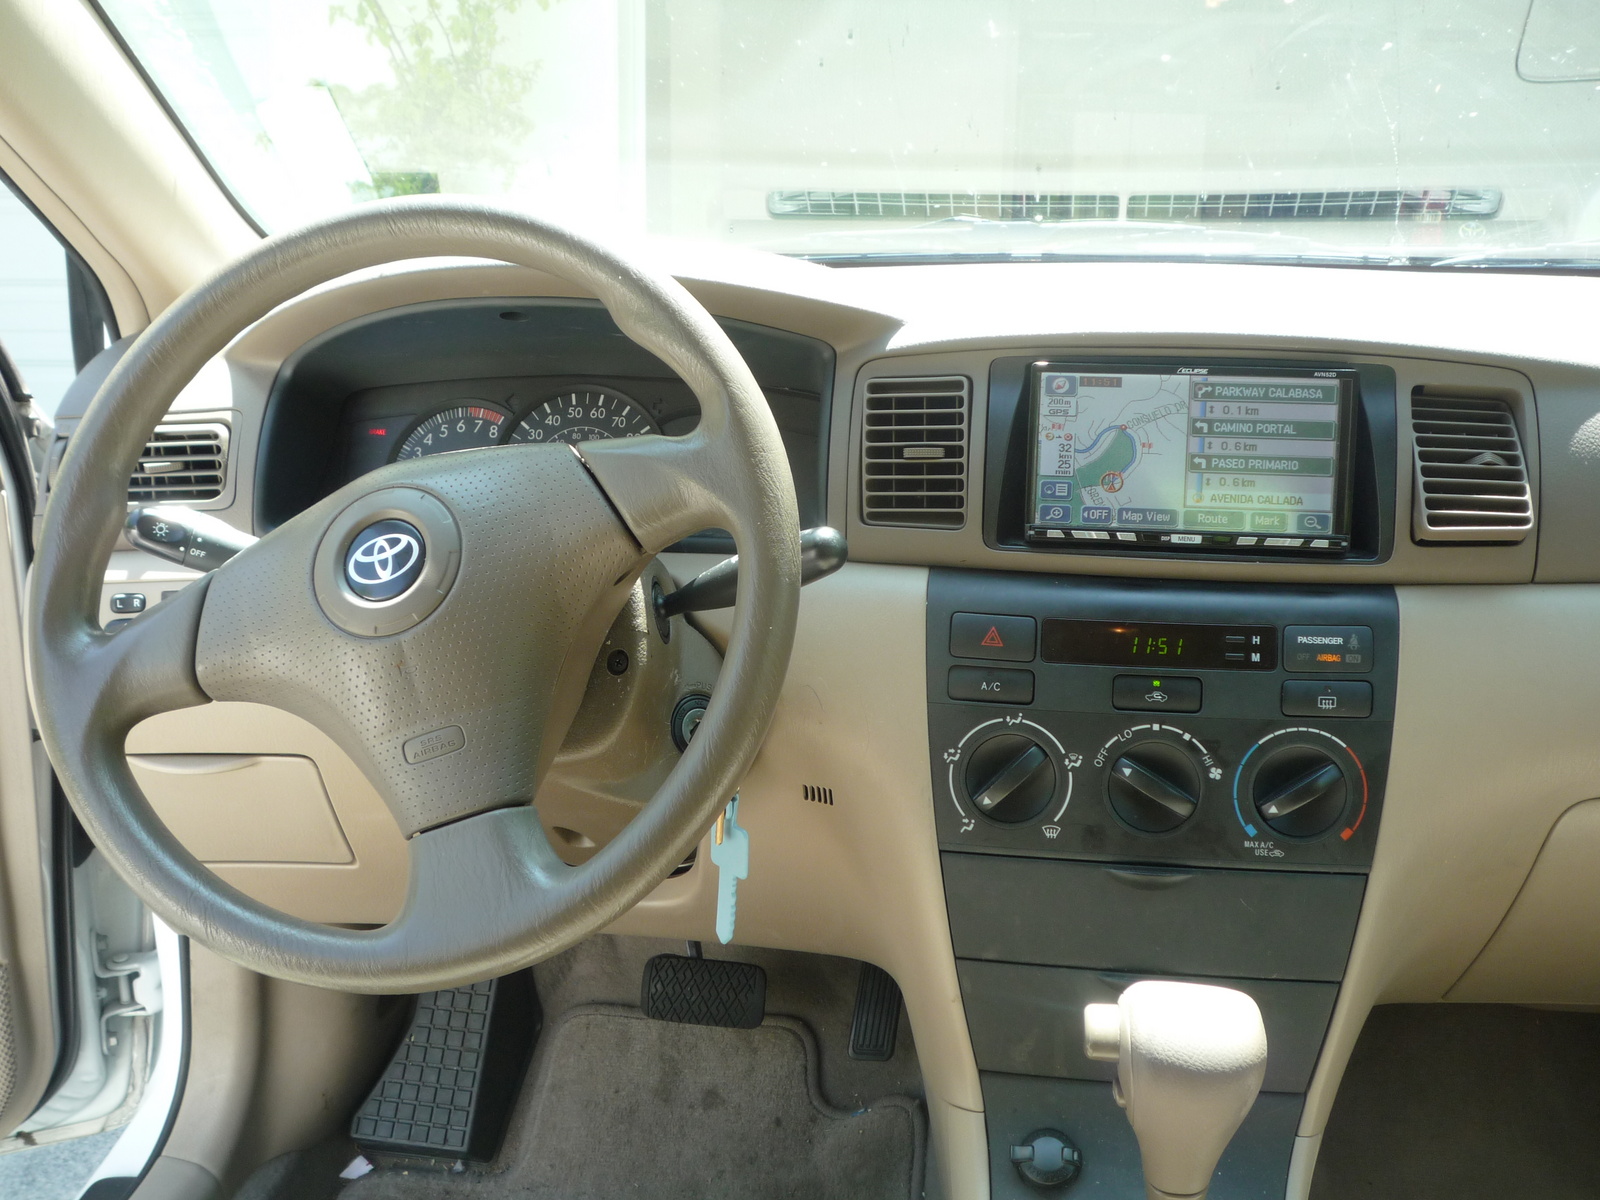 2008 Toyota corolla interior pictures